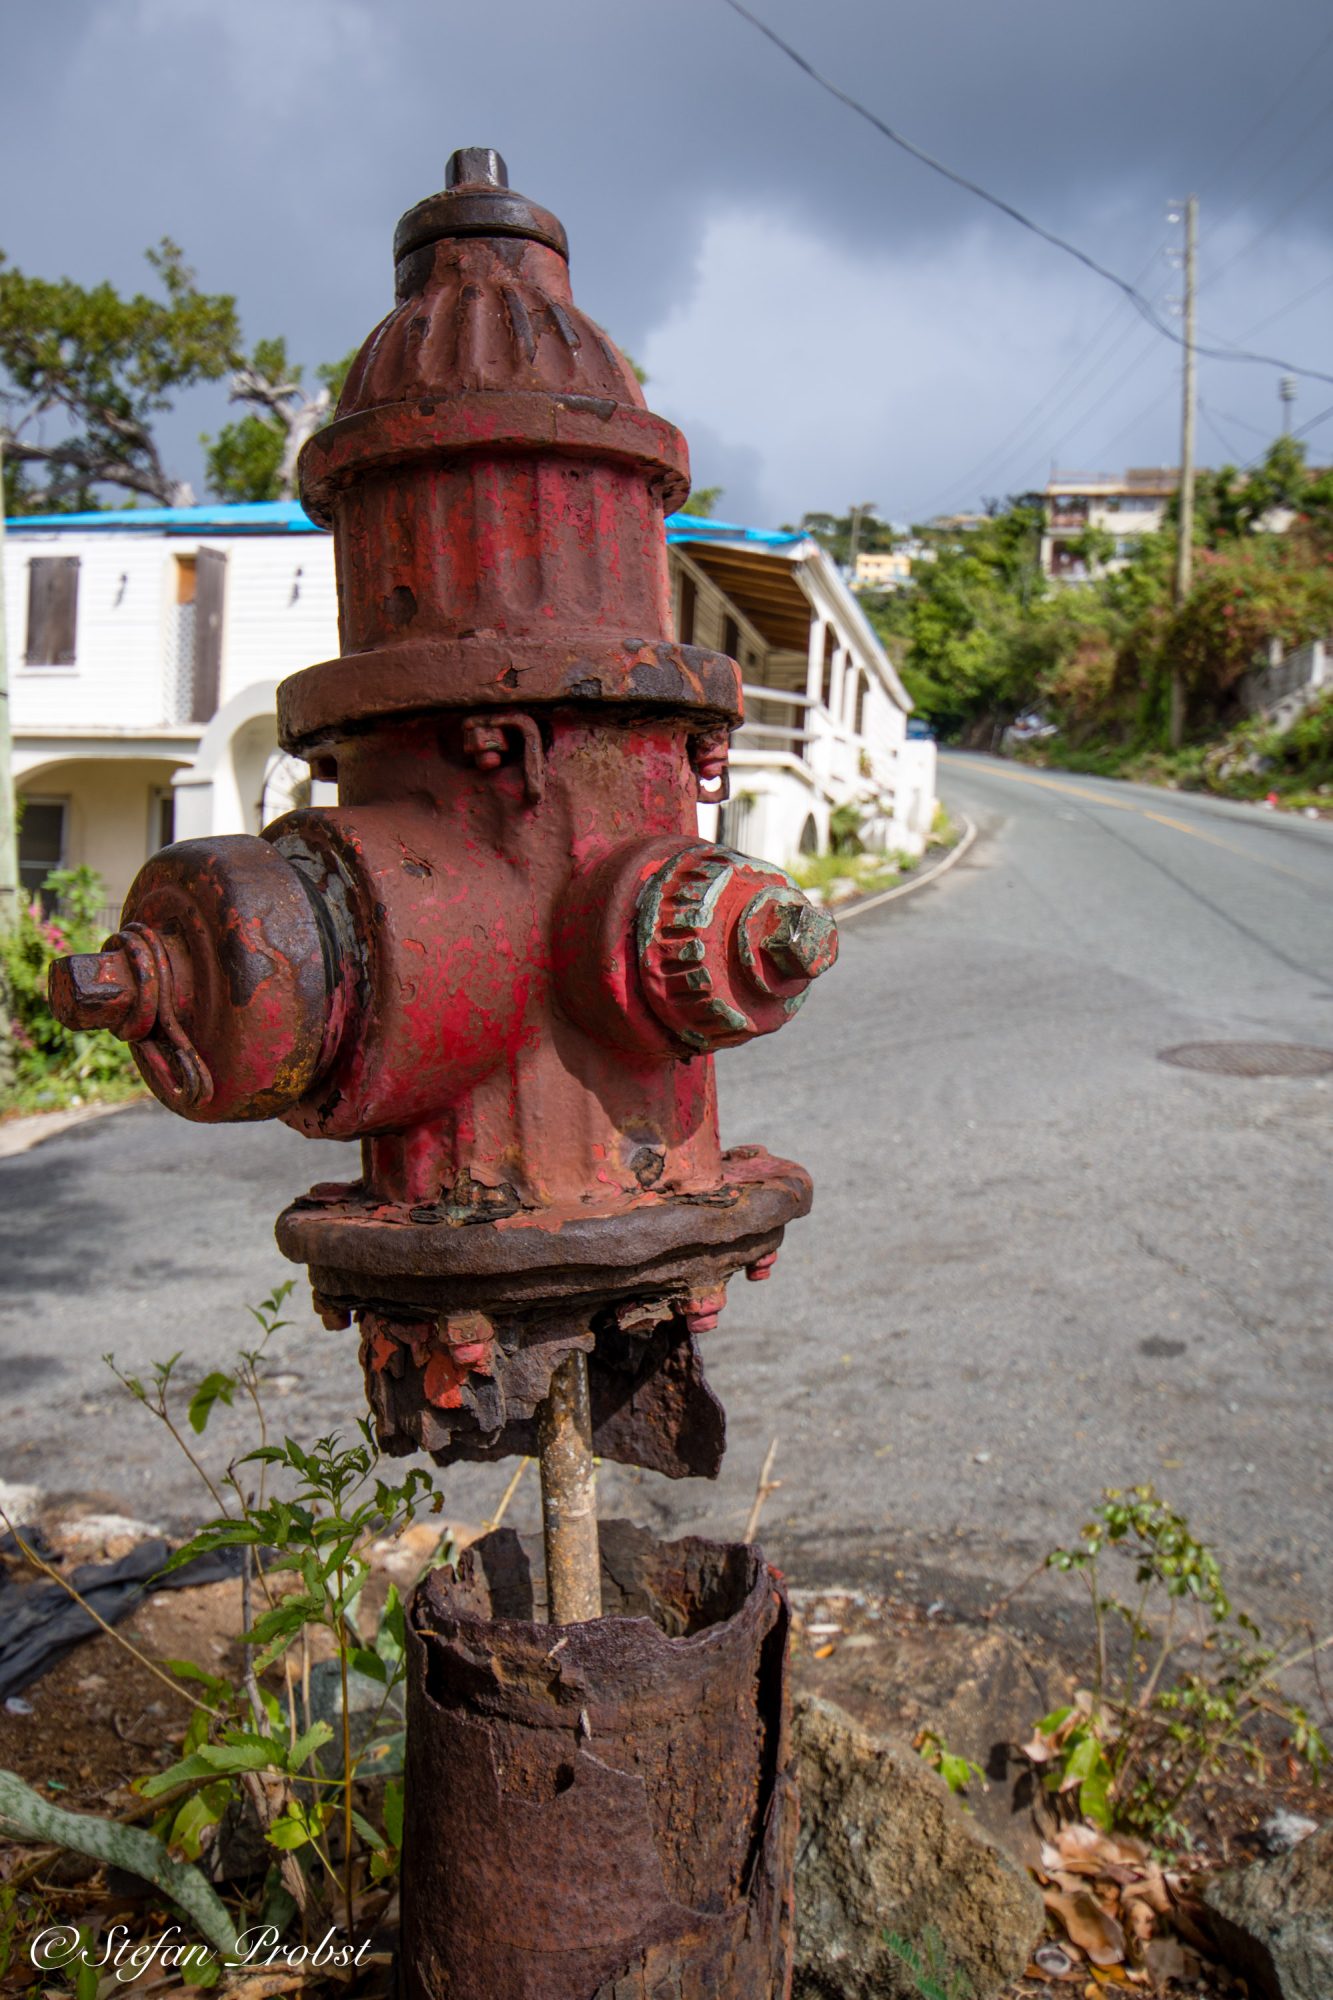 U.S. Virgin Islands - St. Thomas - Old hydrant